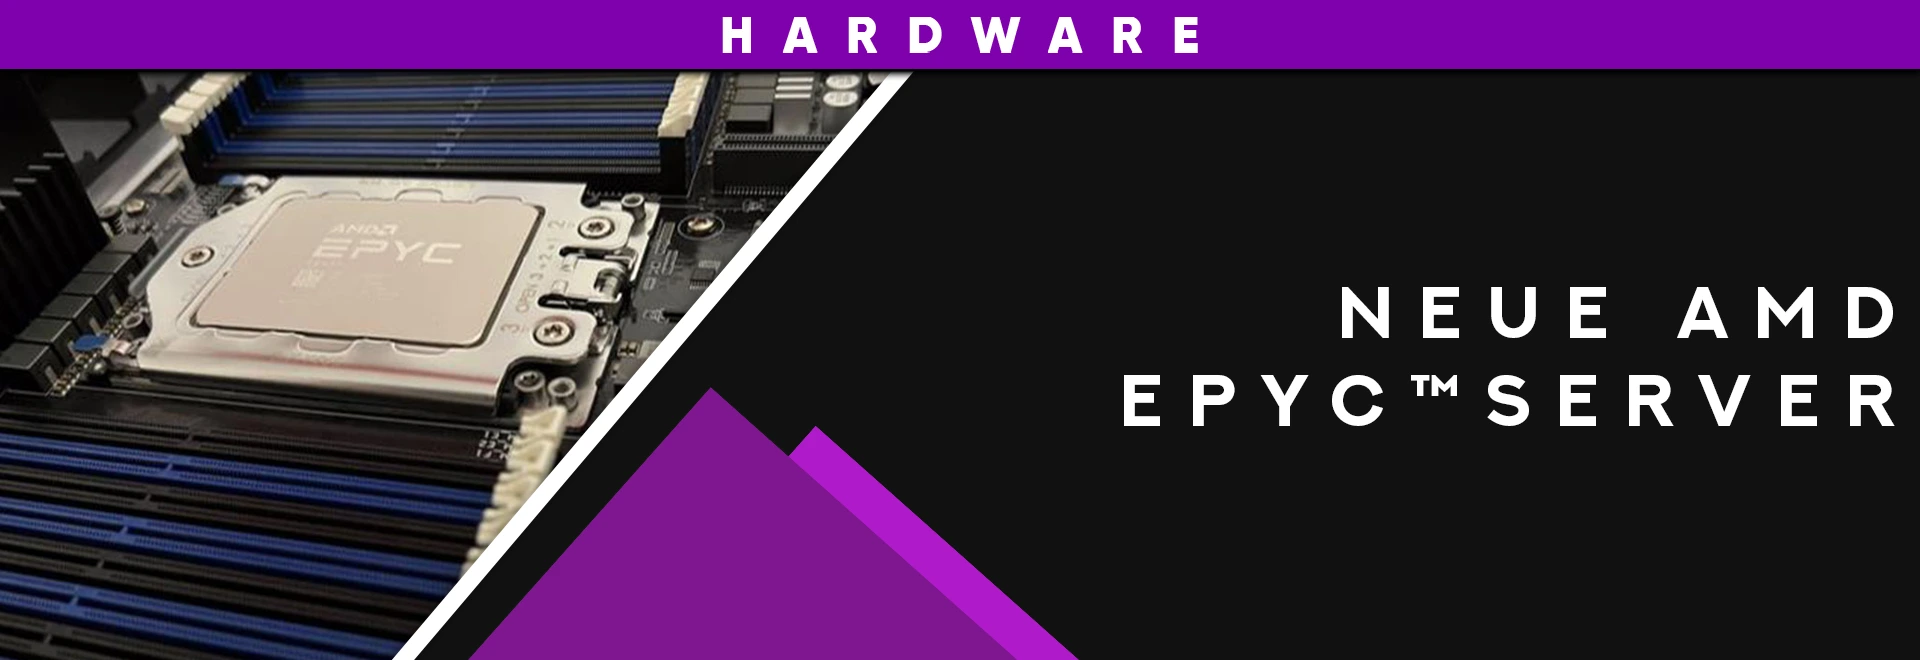 Neue AMD EPYC™ Server